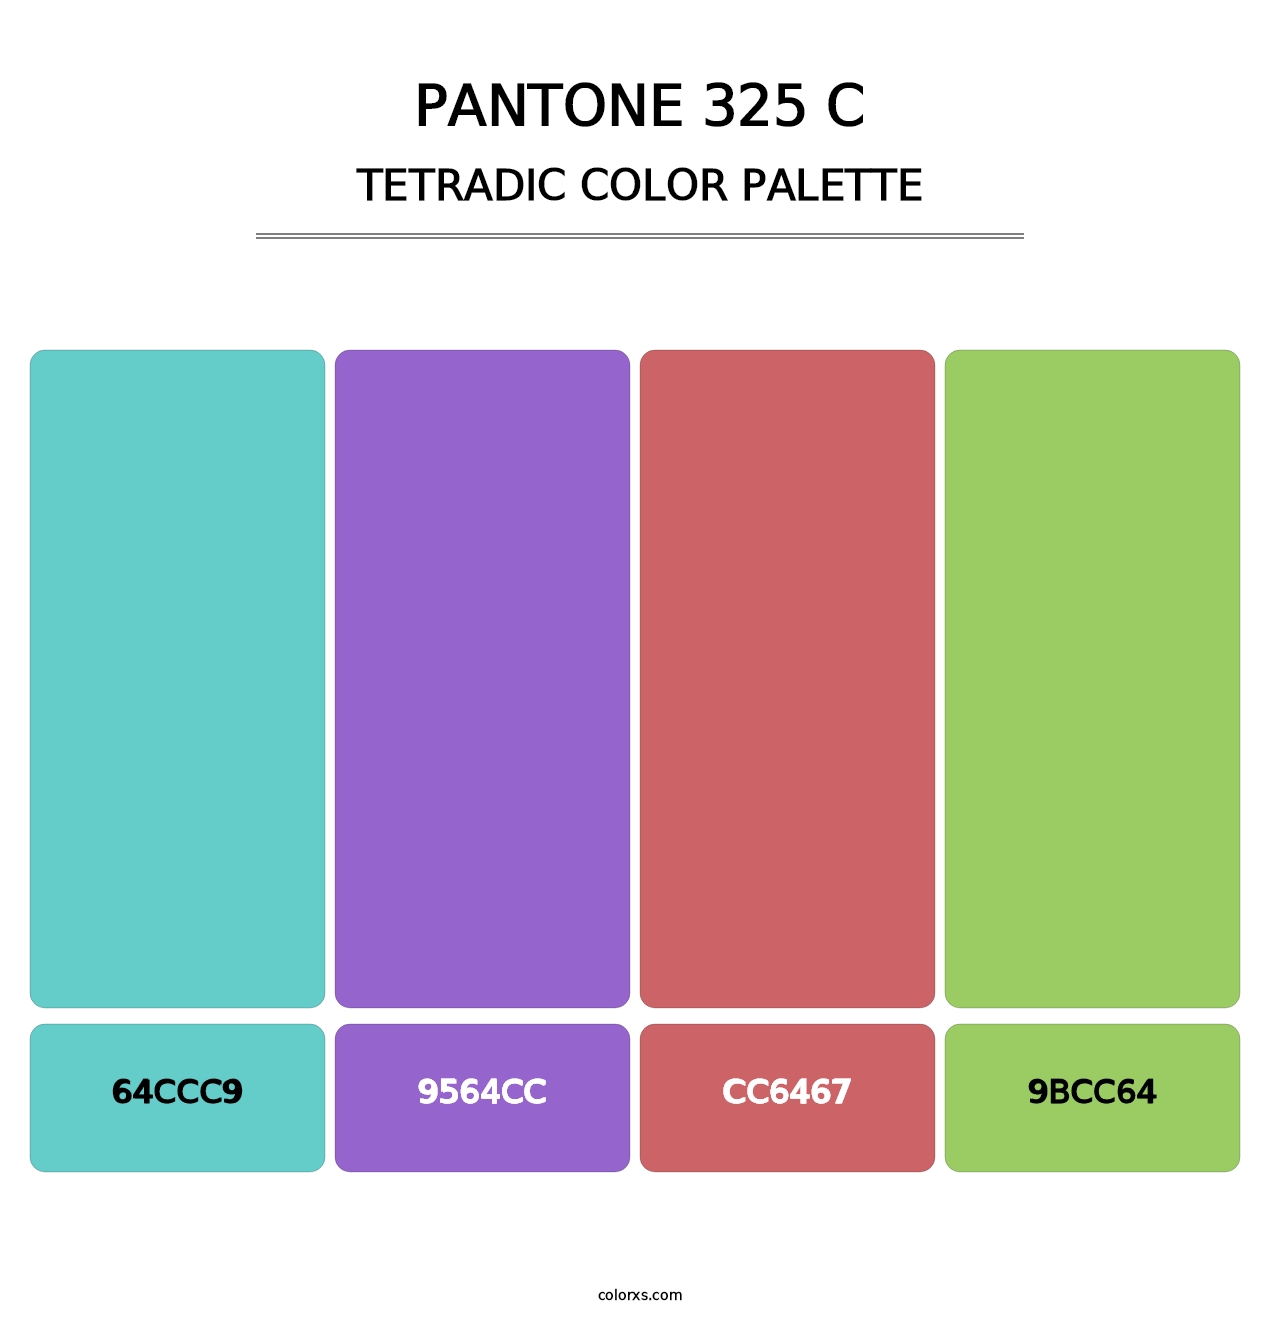 PANTONE 325 C - Tetradic Color Palette